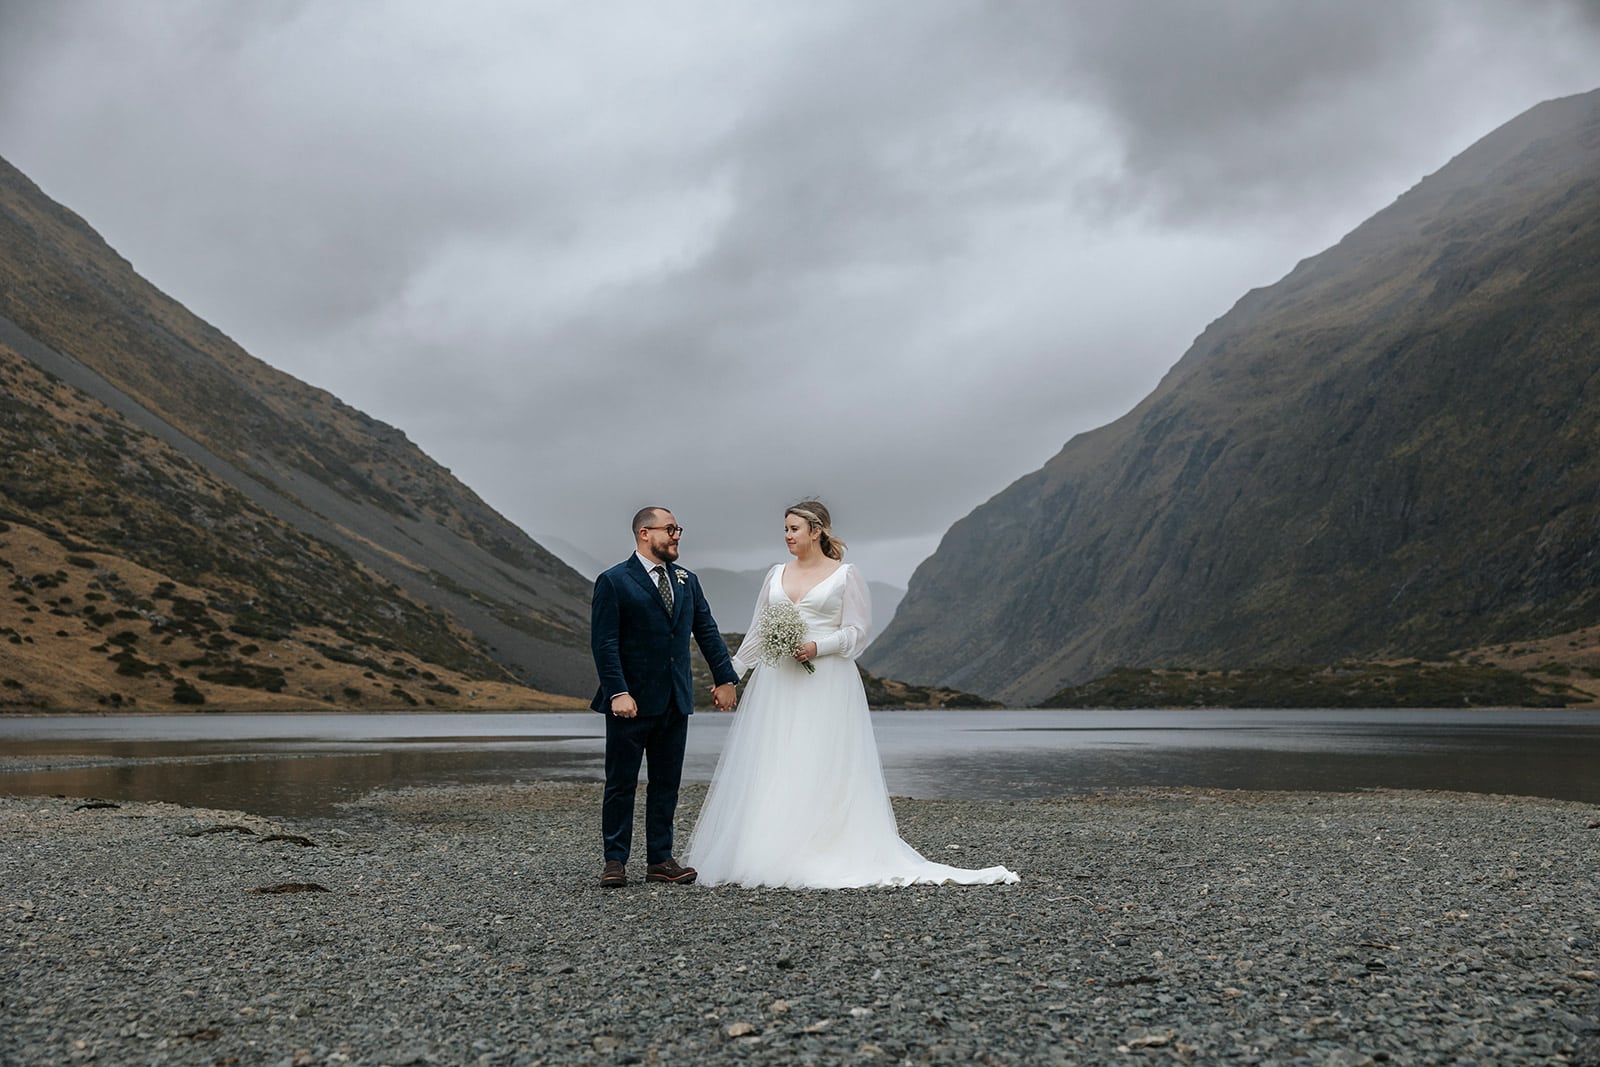 Heli wedding in Queenstown New Zealand next to alpine lake